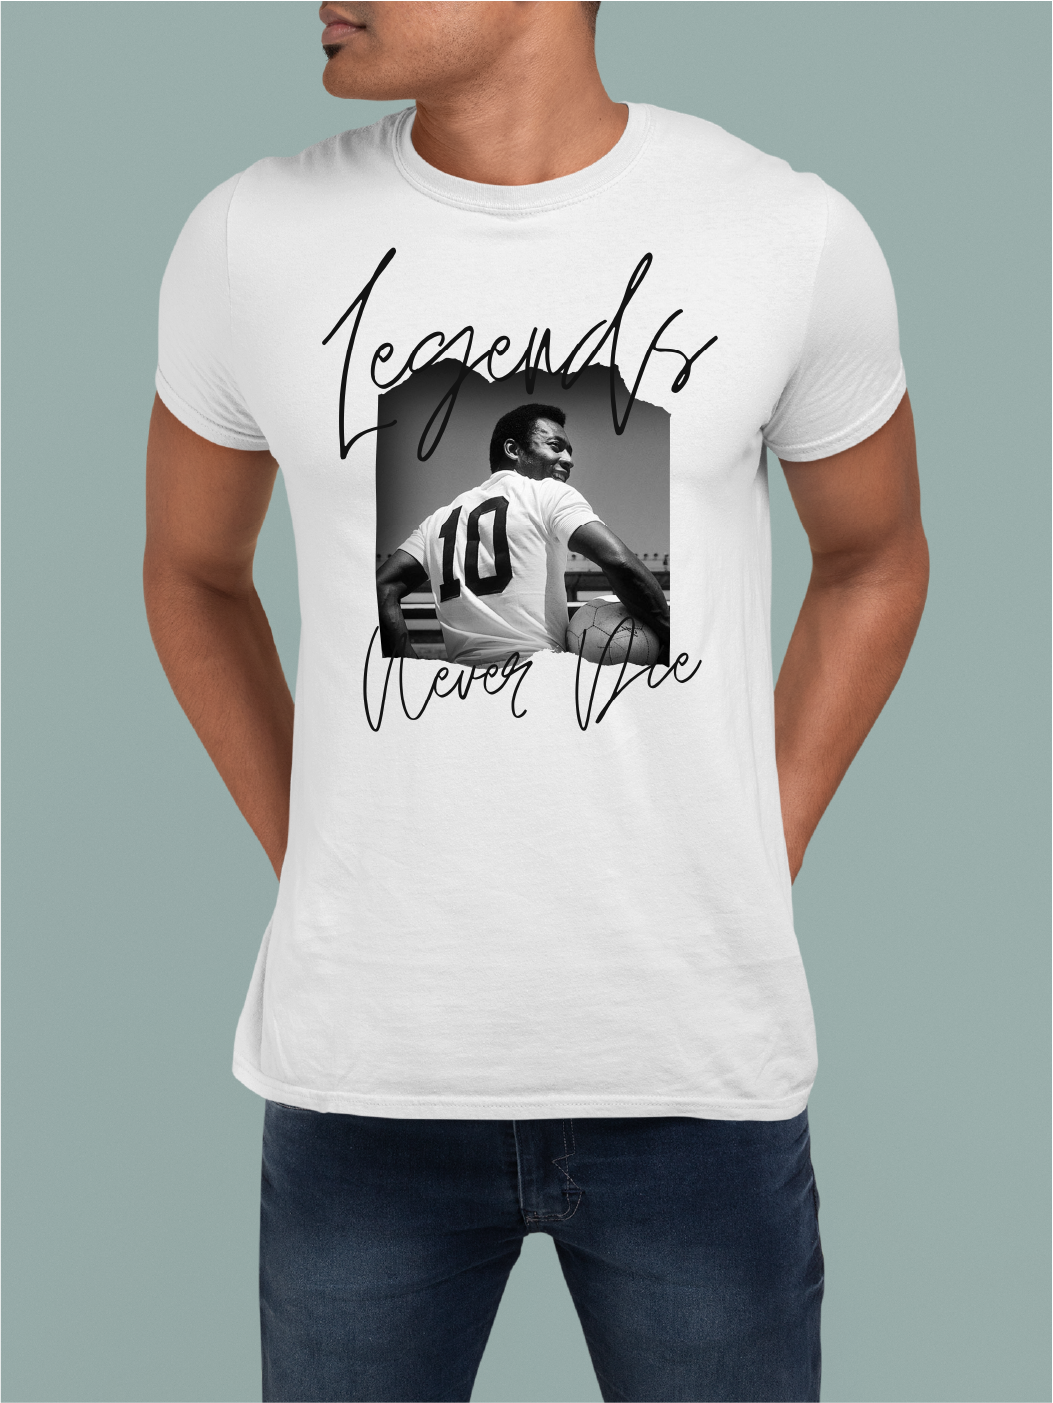 Pele Legends Never Die Shirt